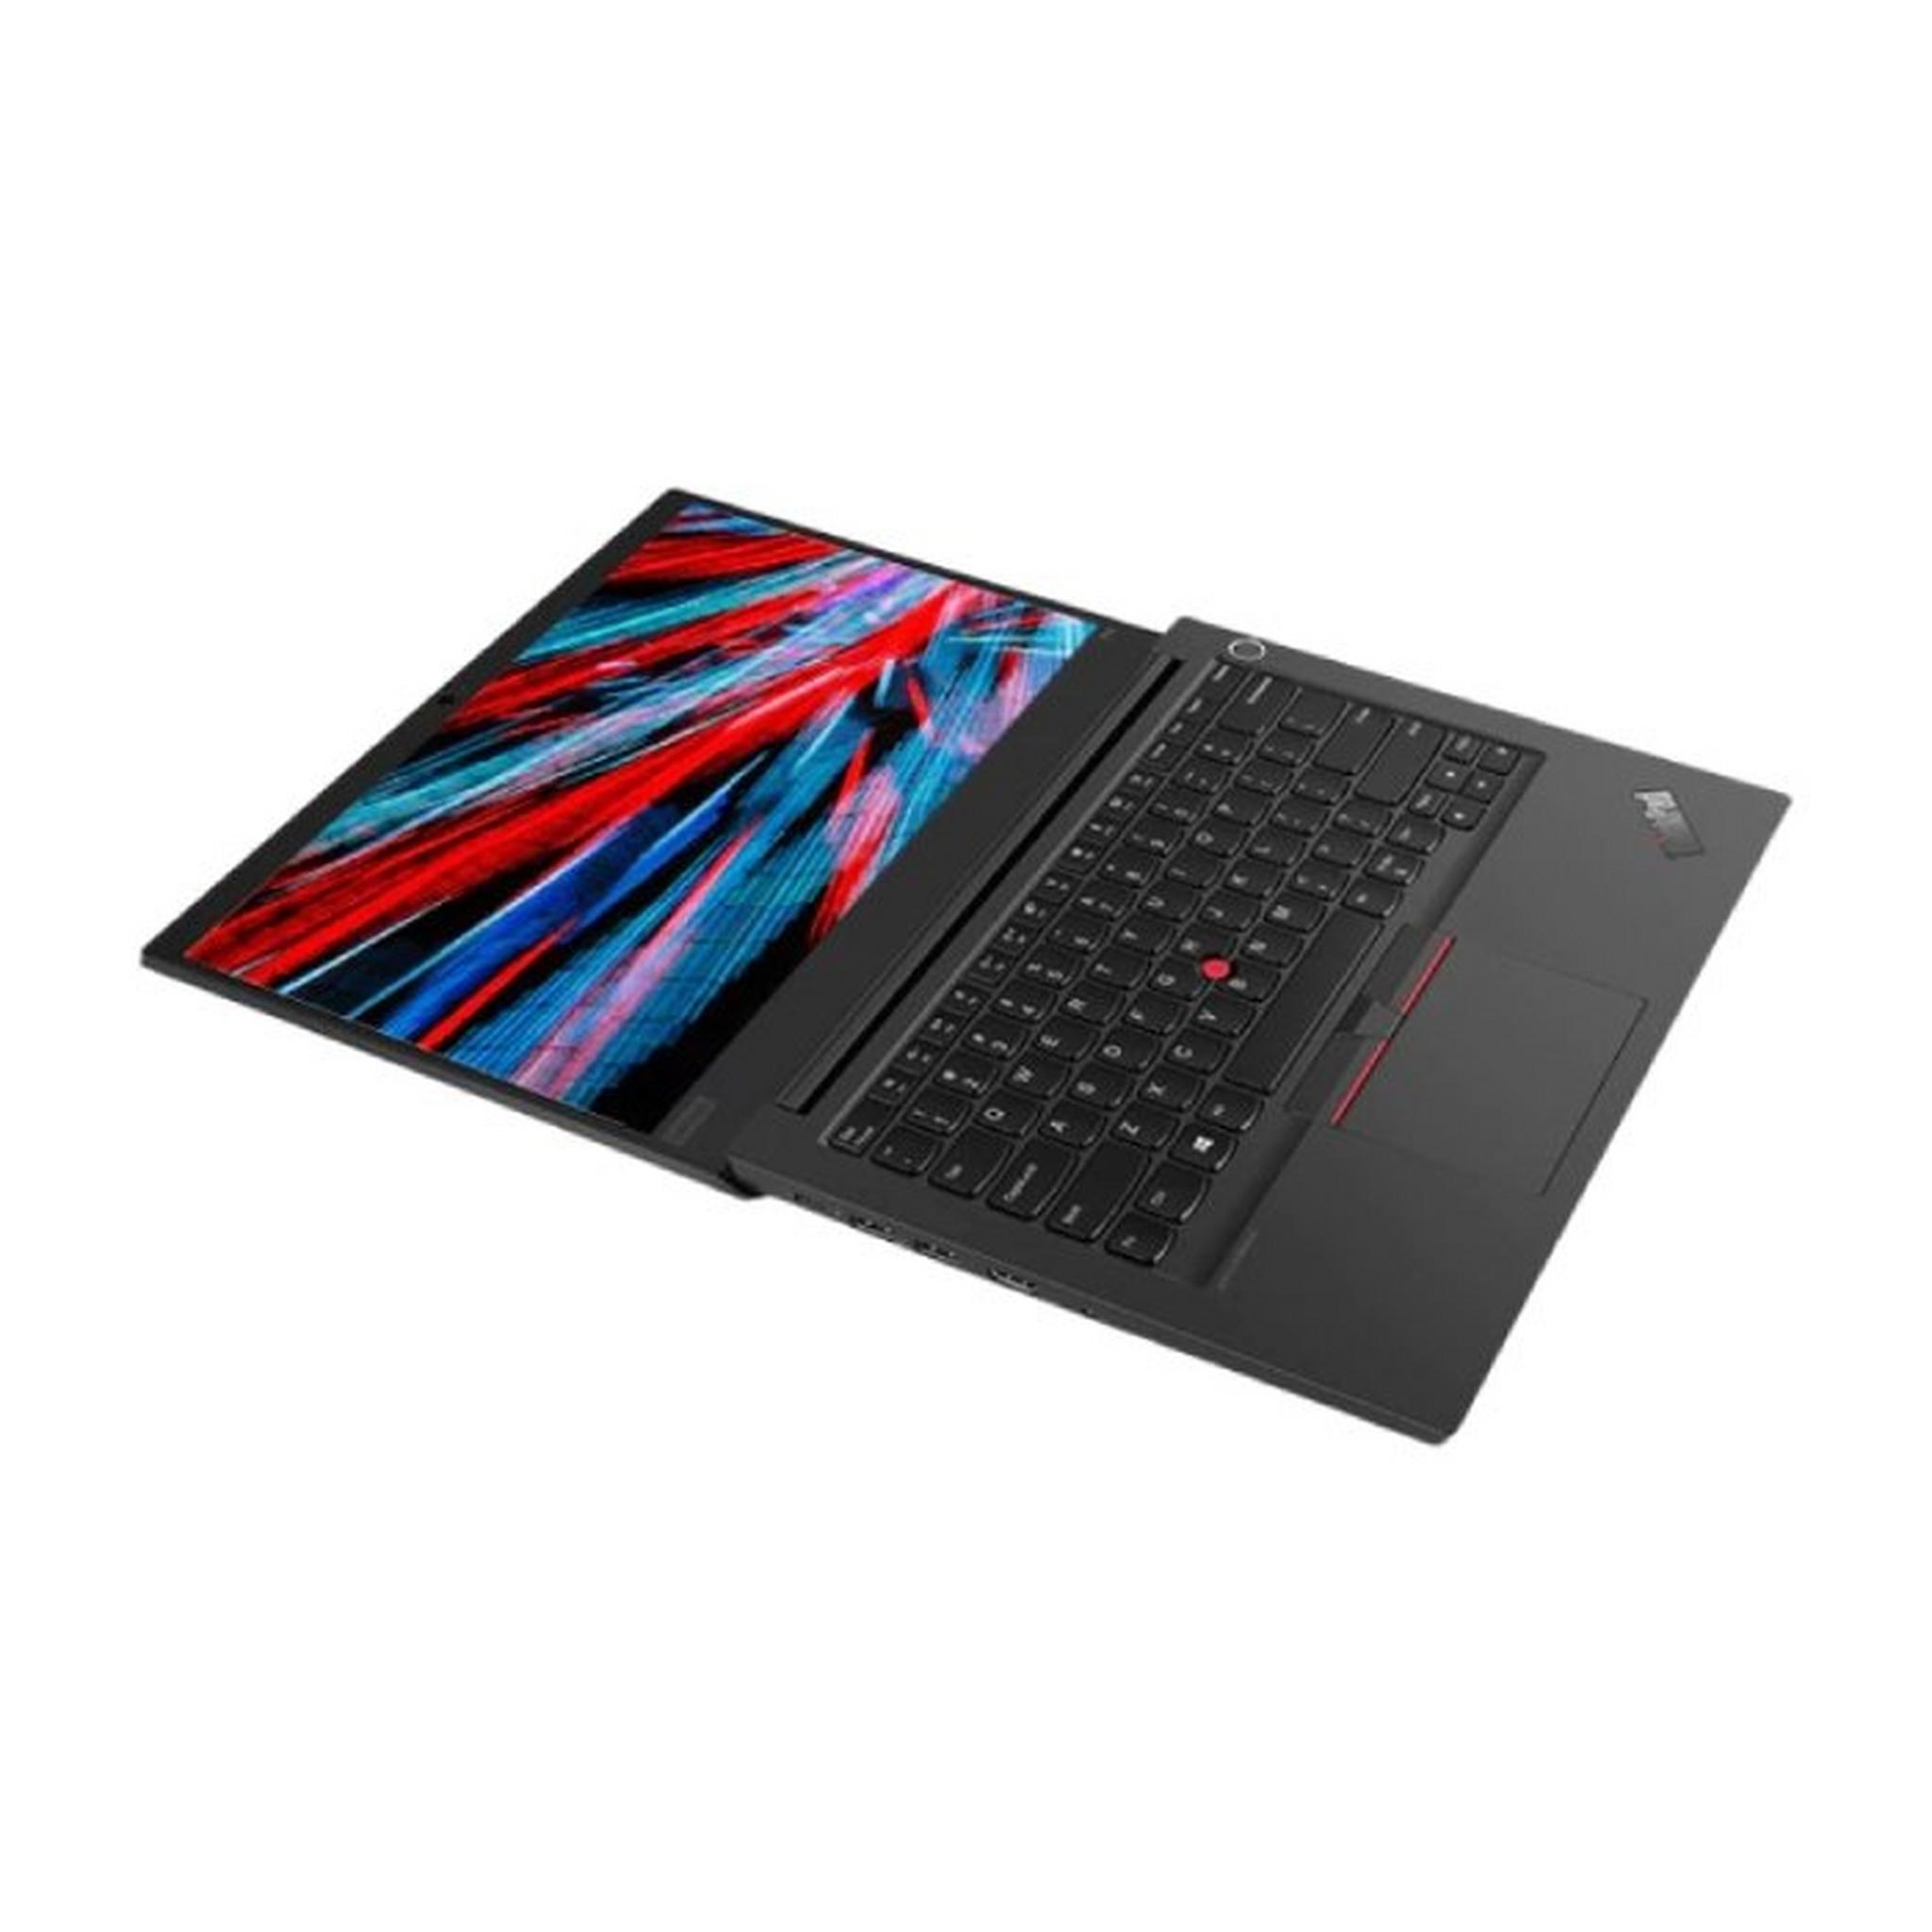 Lenovo ThinkPad E15, Core i7, AMD 2GB, RAM 8GB, HDD 1TB, 15.6" FHD Laptop - Black (20RD001UAD)